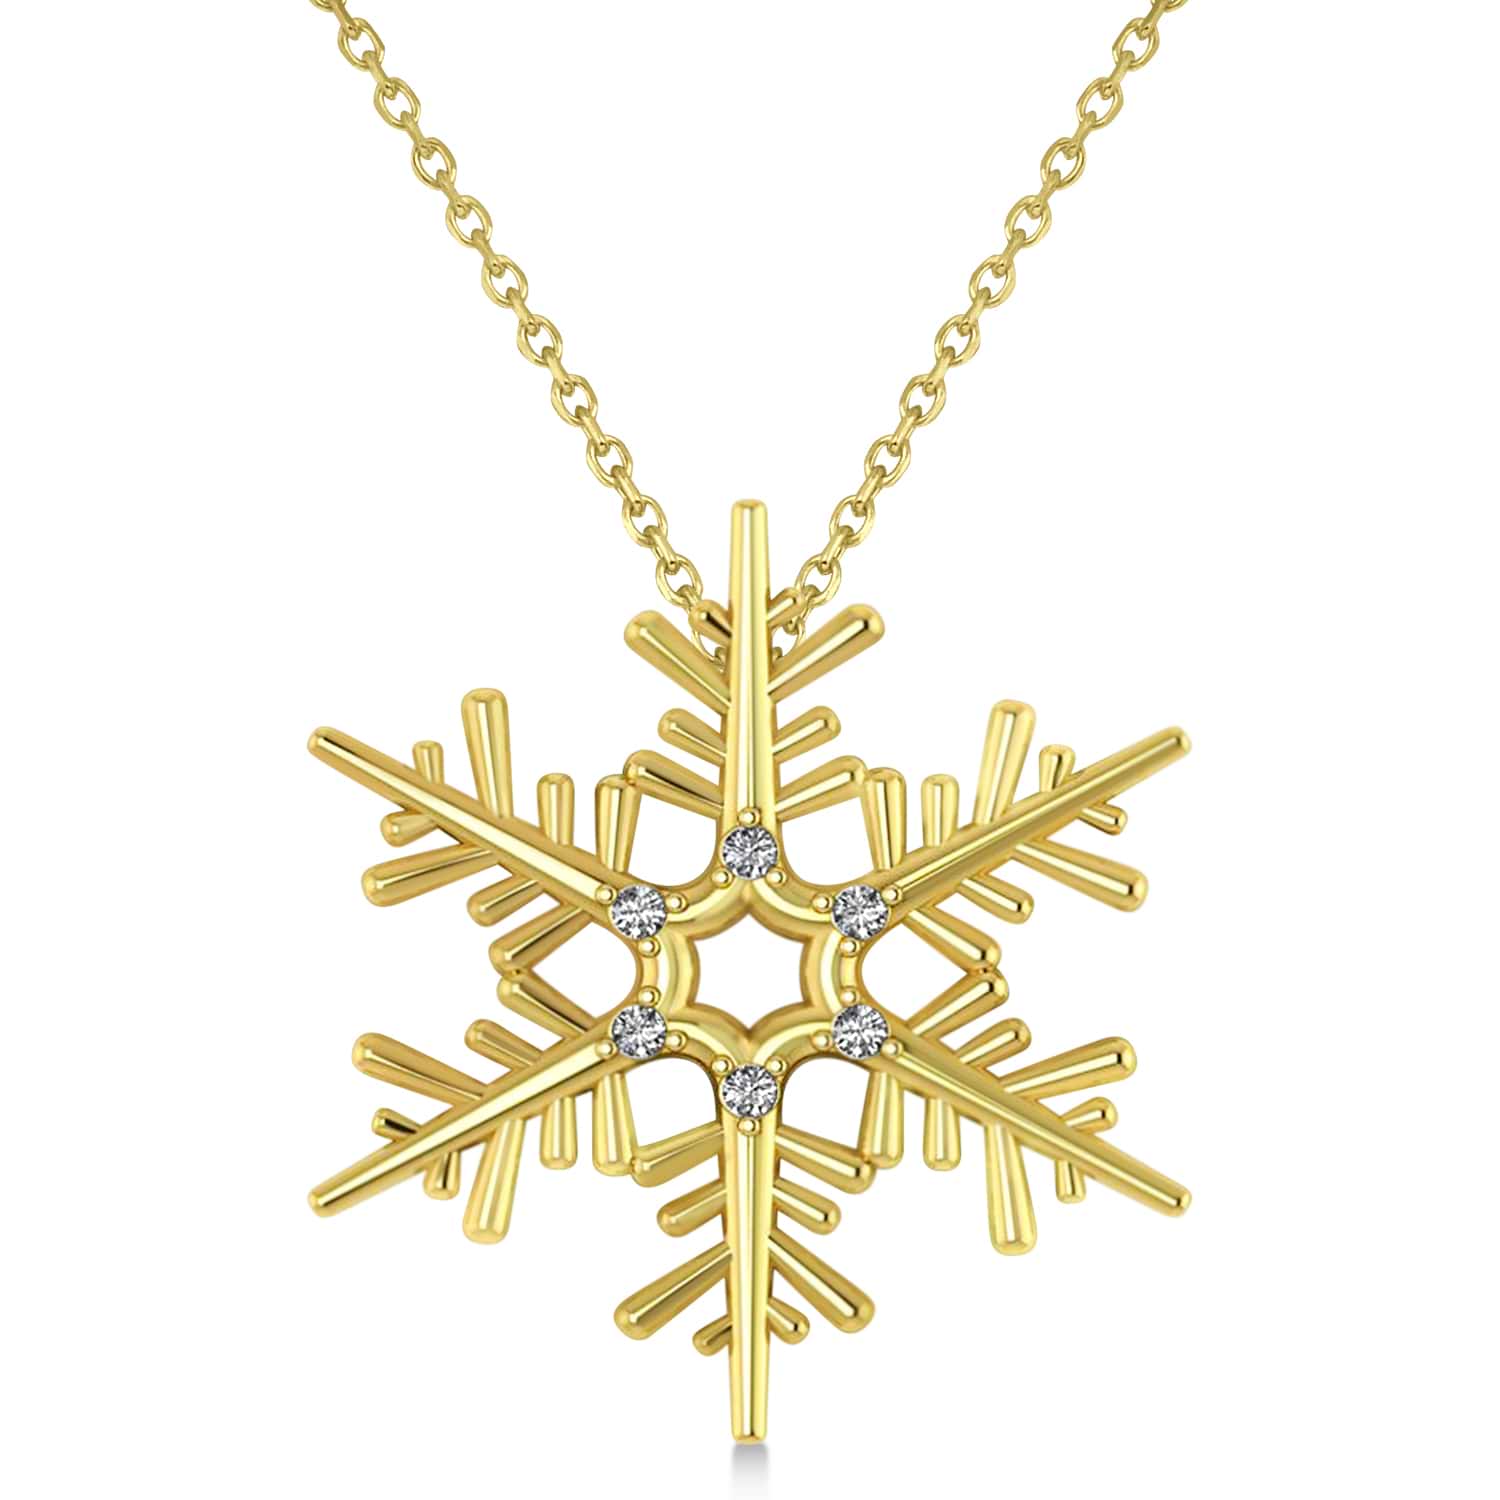 Diamond Snowflake Pendant Necklace 14k Yellow Gold (0.06ct)